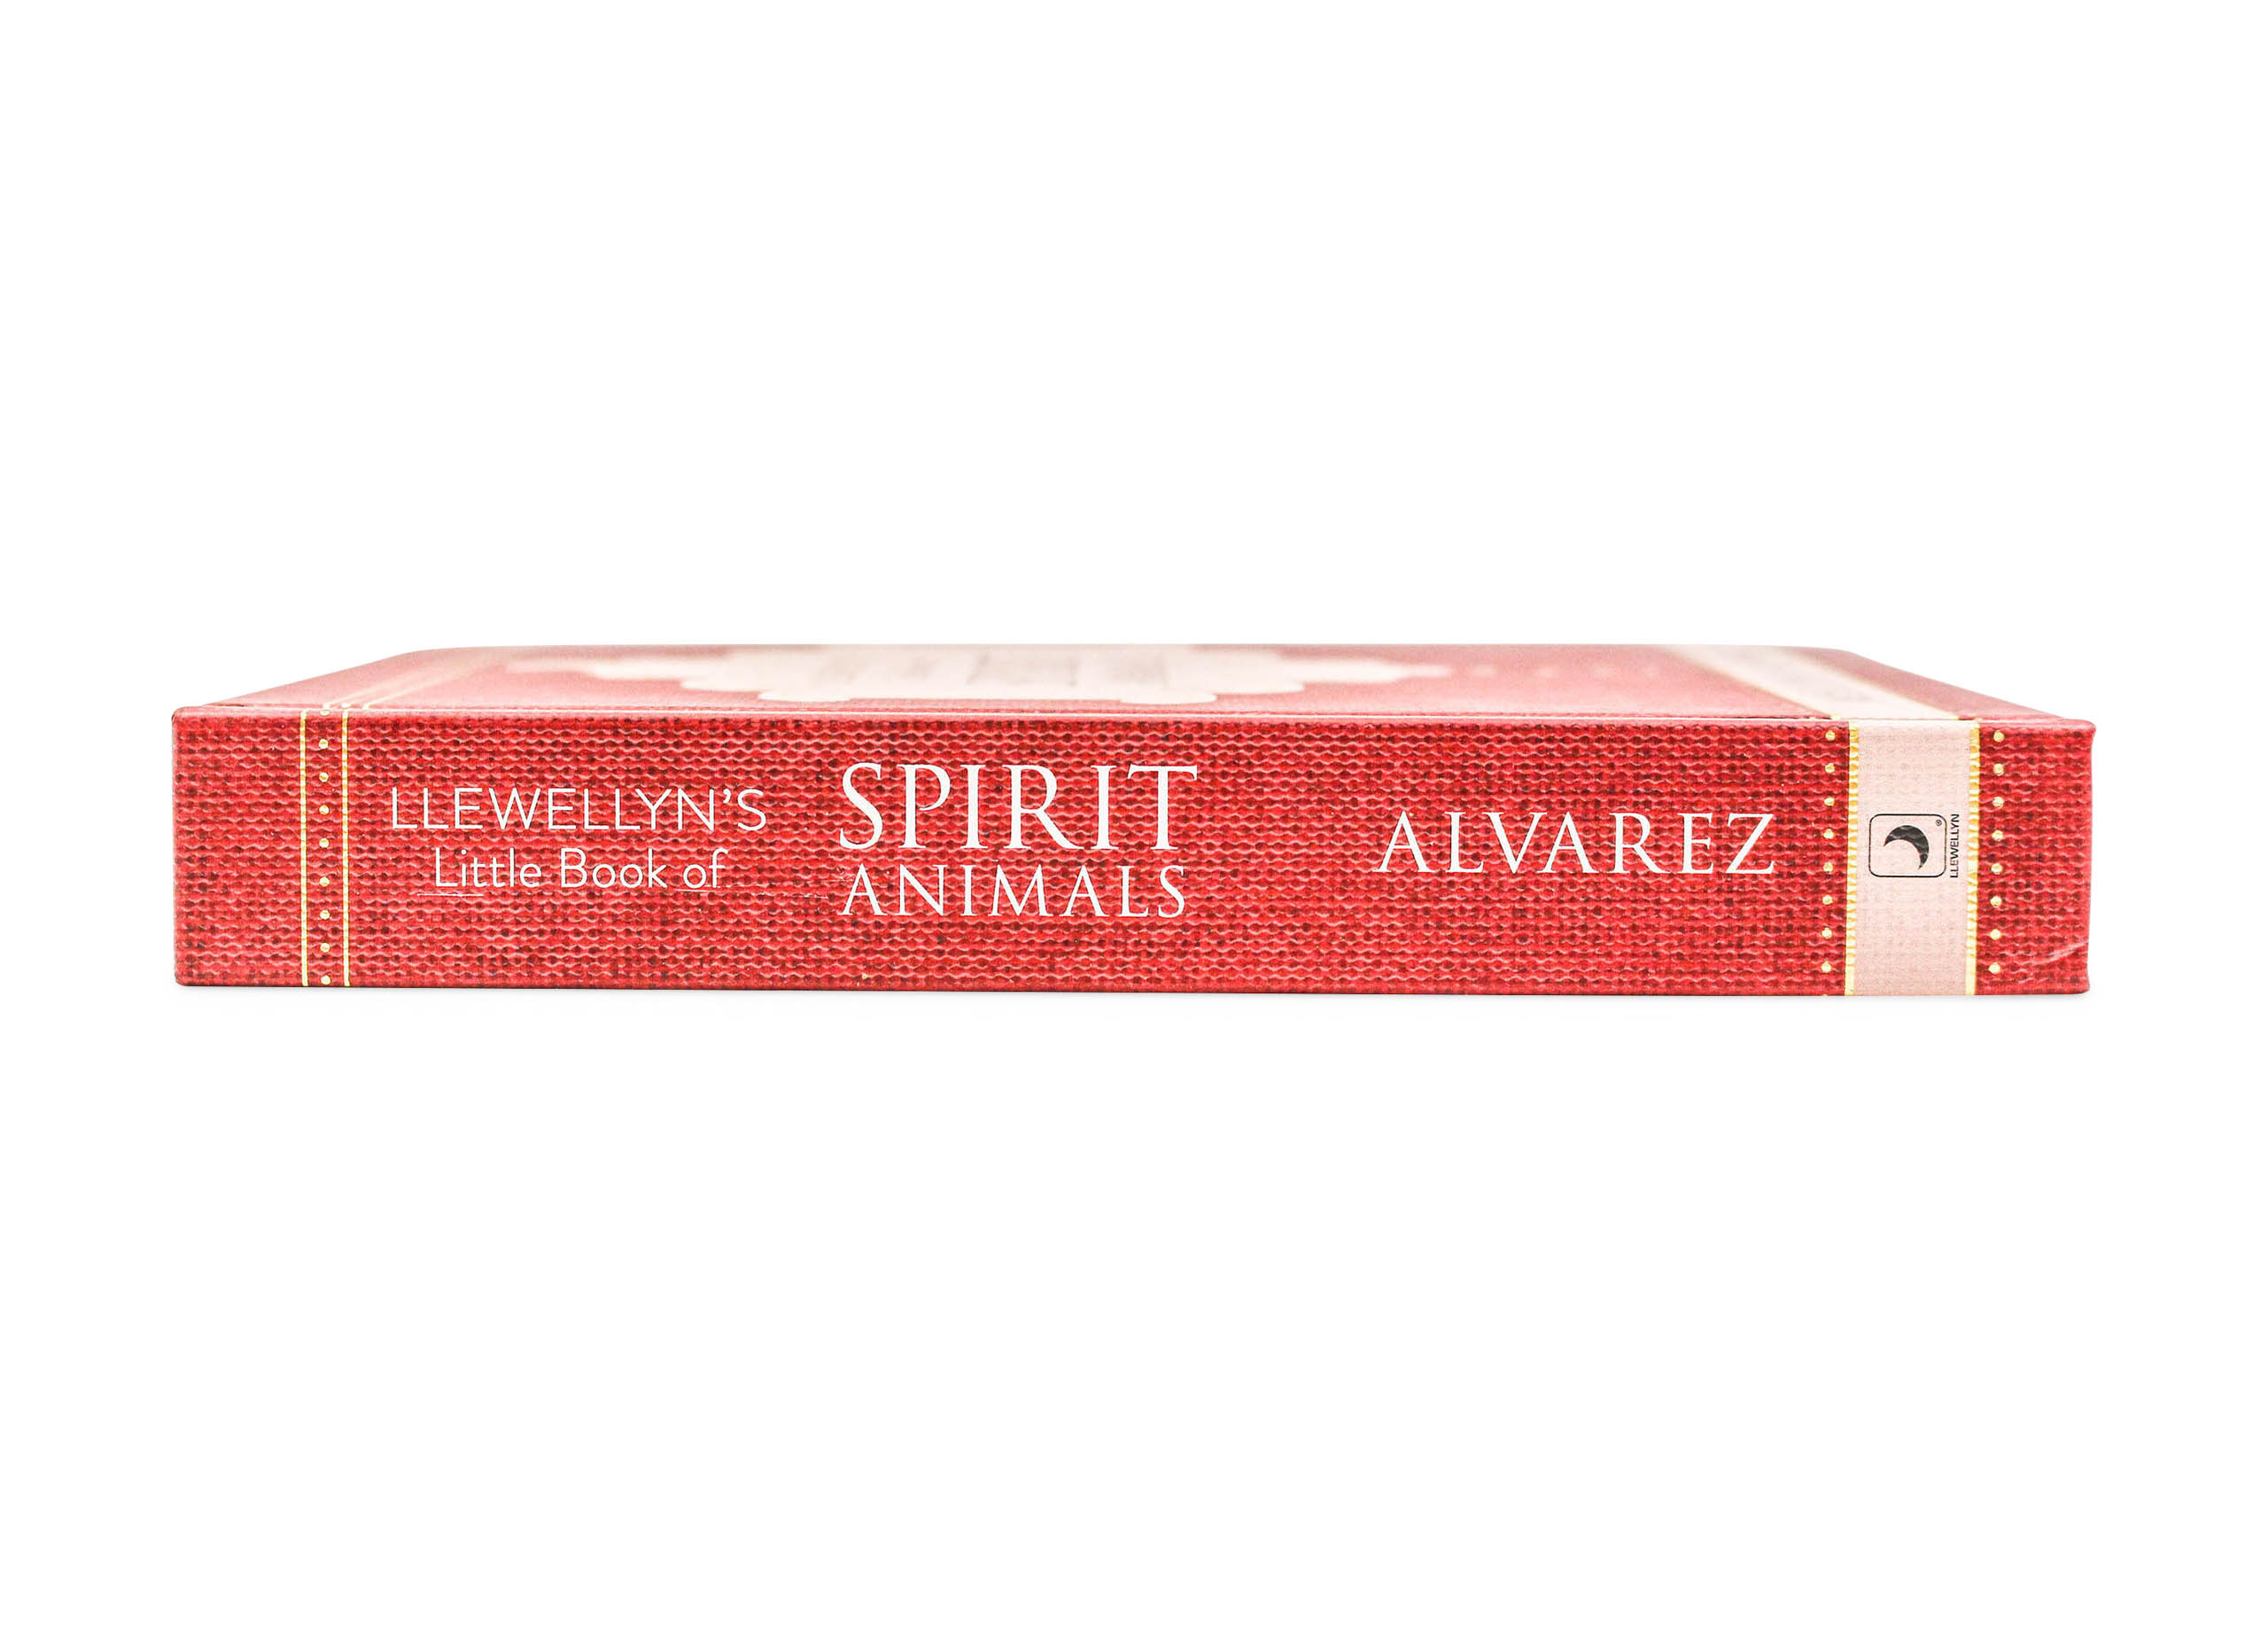 Llewellyn's Little Book of Spirit Animals - Crystal Dreams